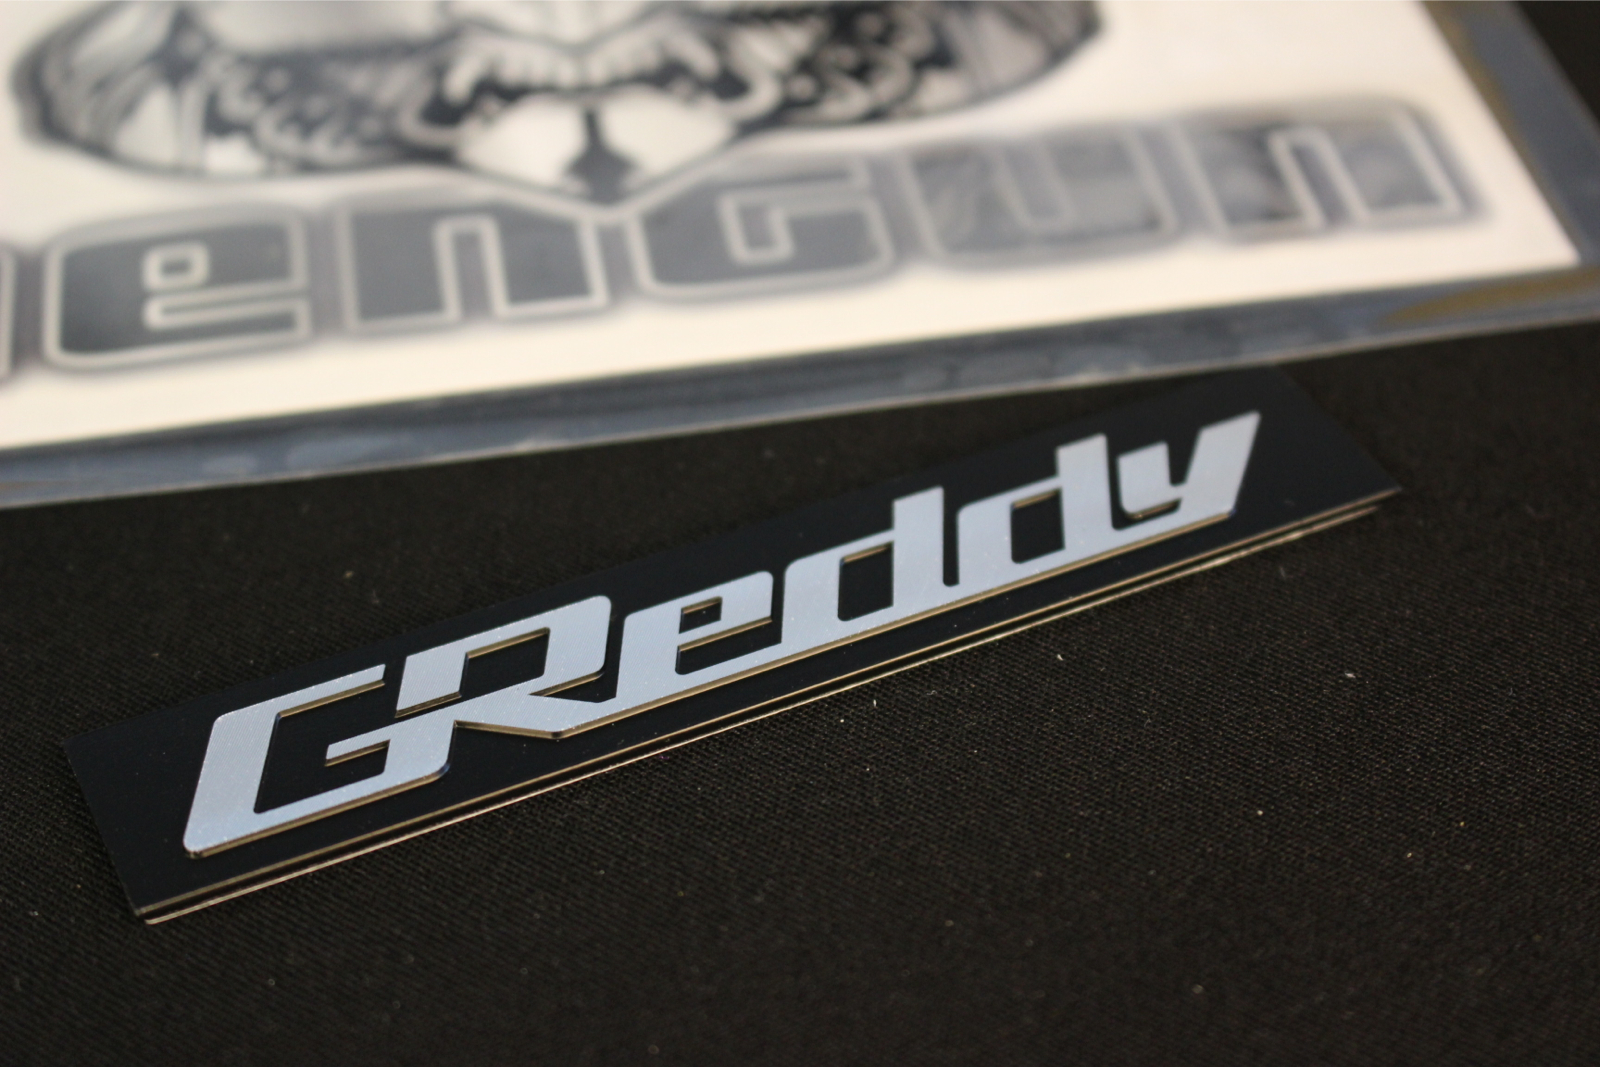 Greddy - Intake Plenum - Nissan Silvia